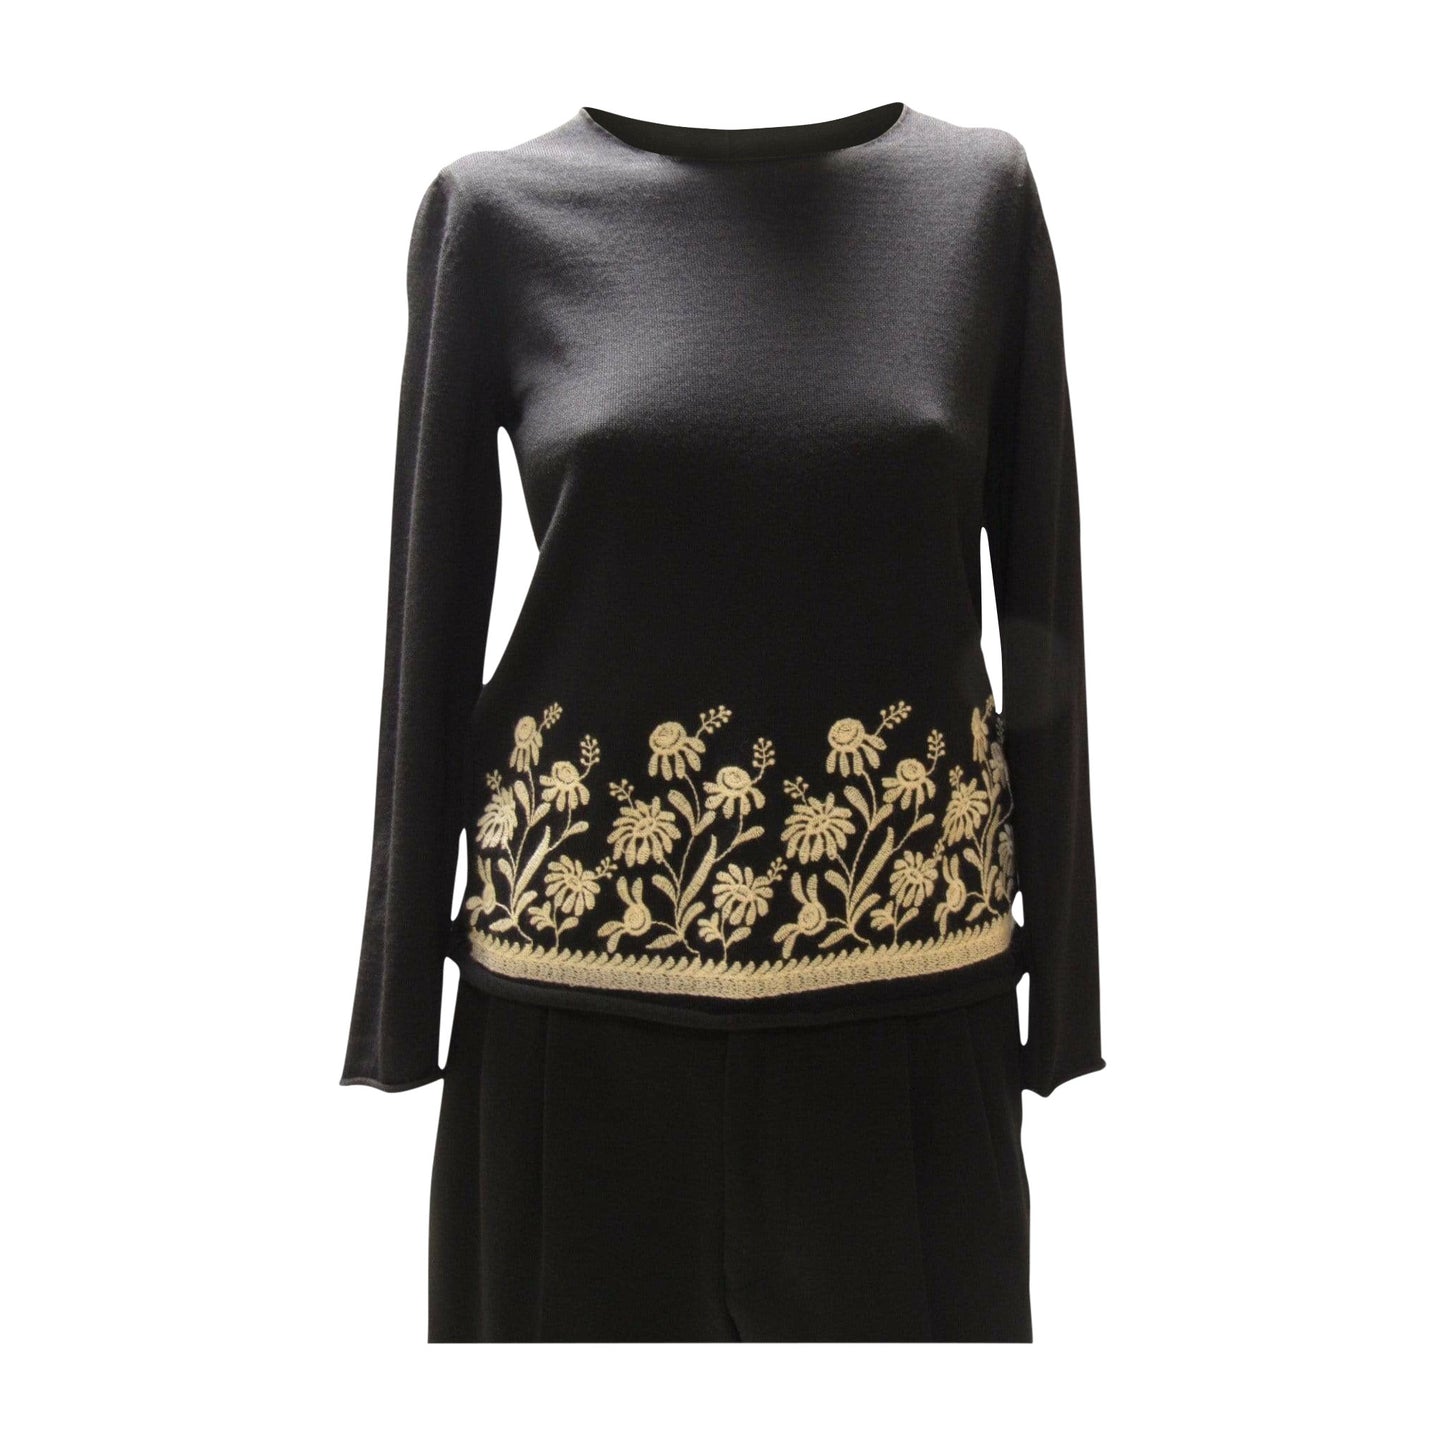 Shirts & Tops comme-des-garcons-floral-embroidered-knit-top Comme des Garçons Black